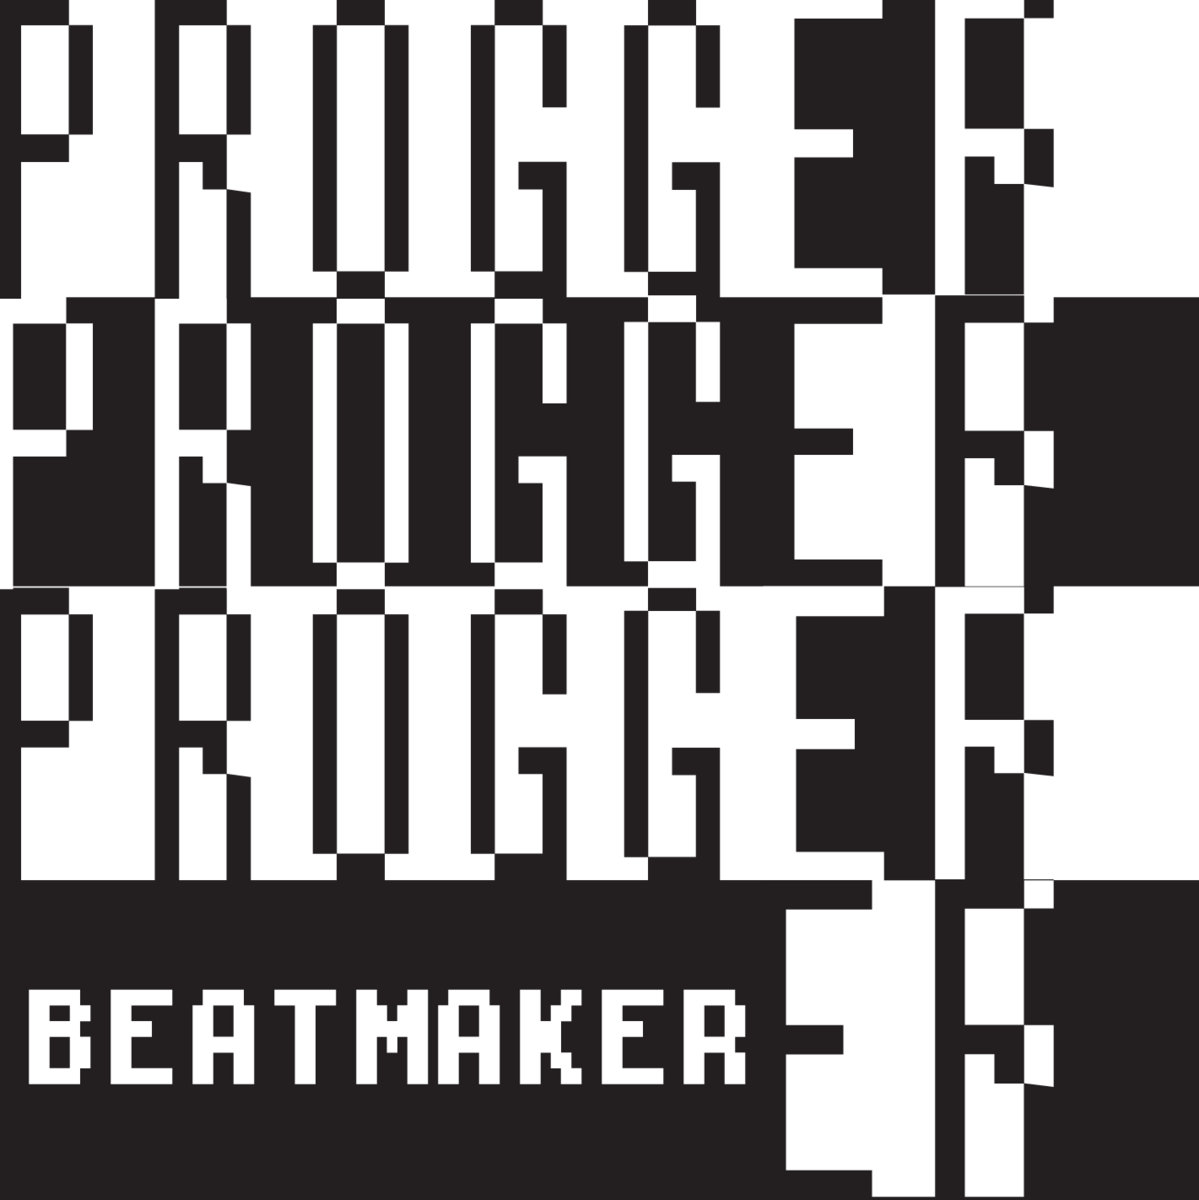 Beatmaker | Progger